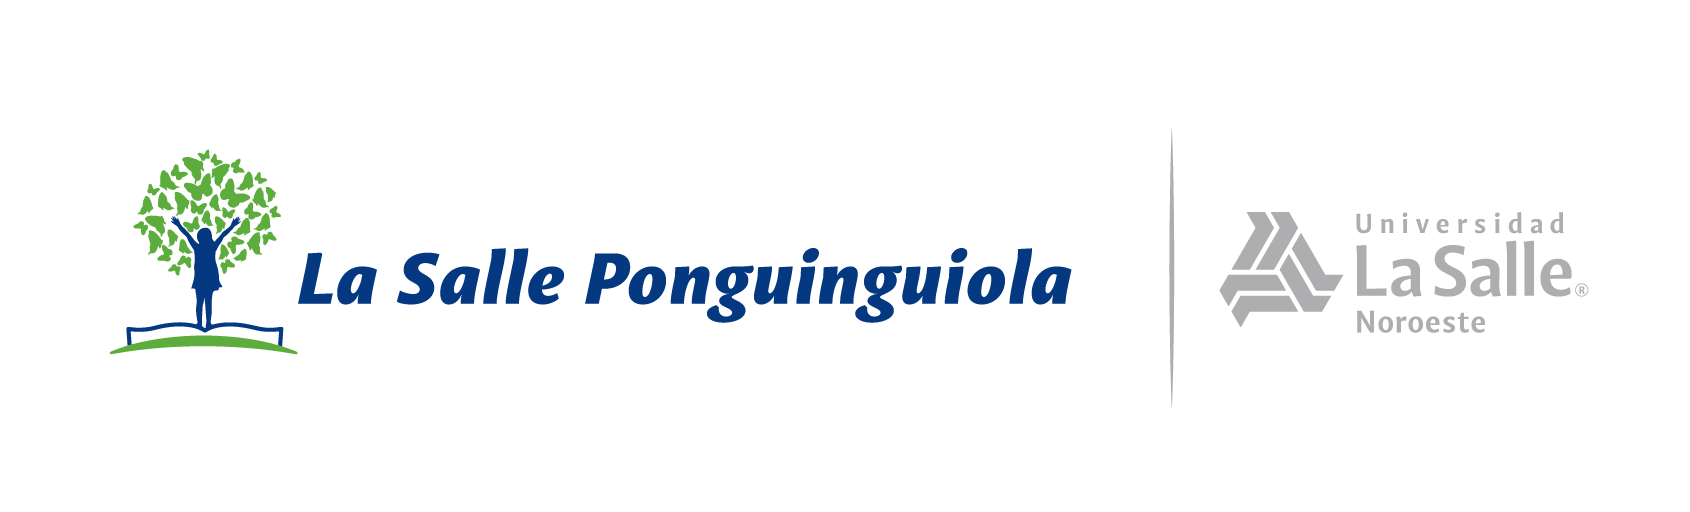 Ponguinguiola-logo